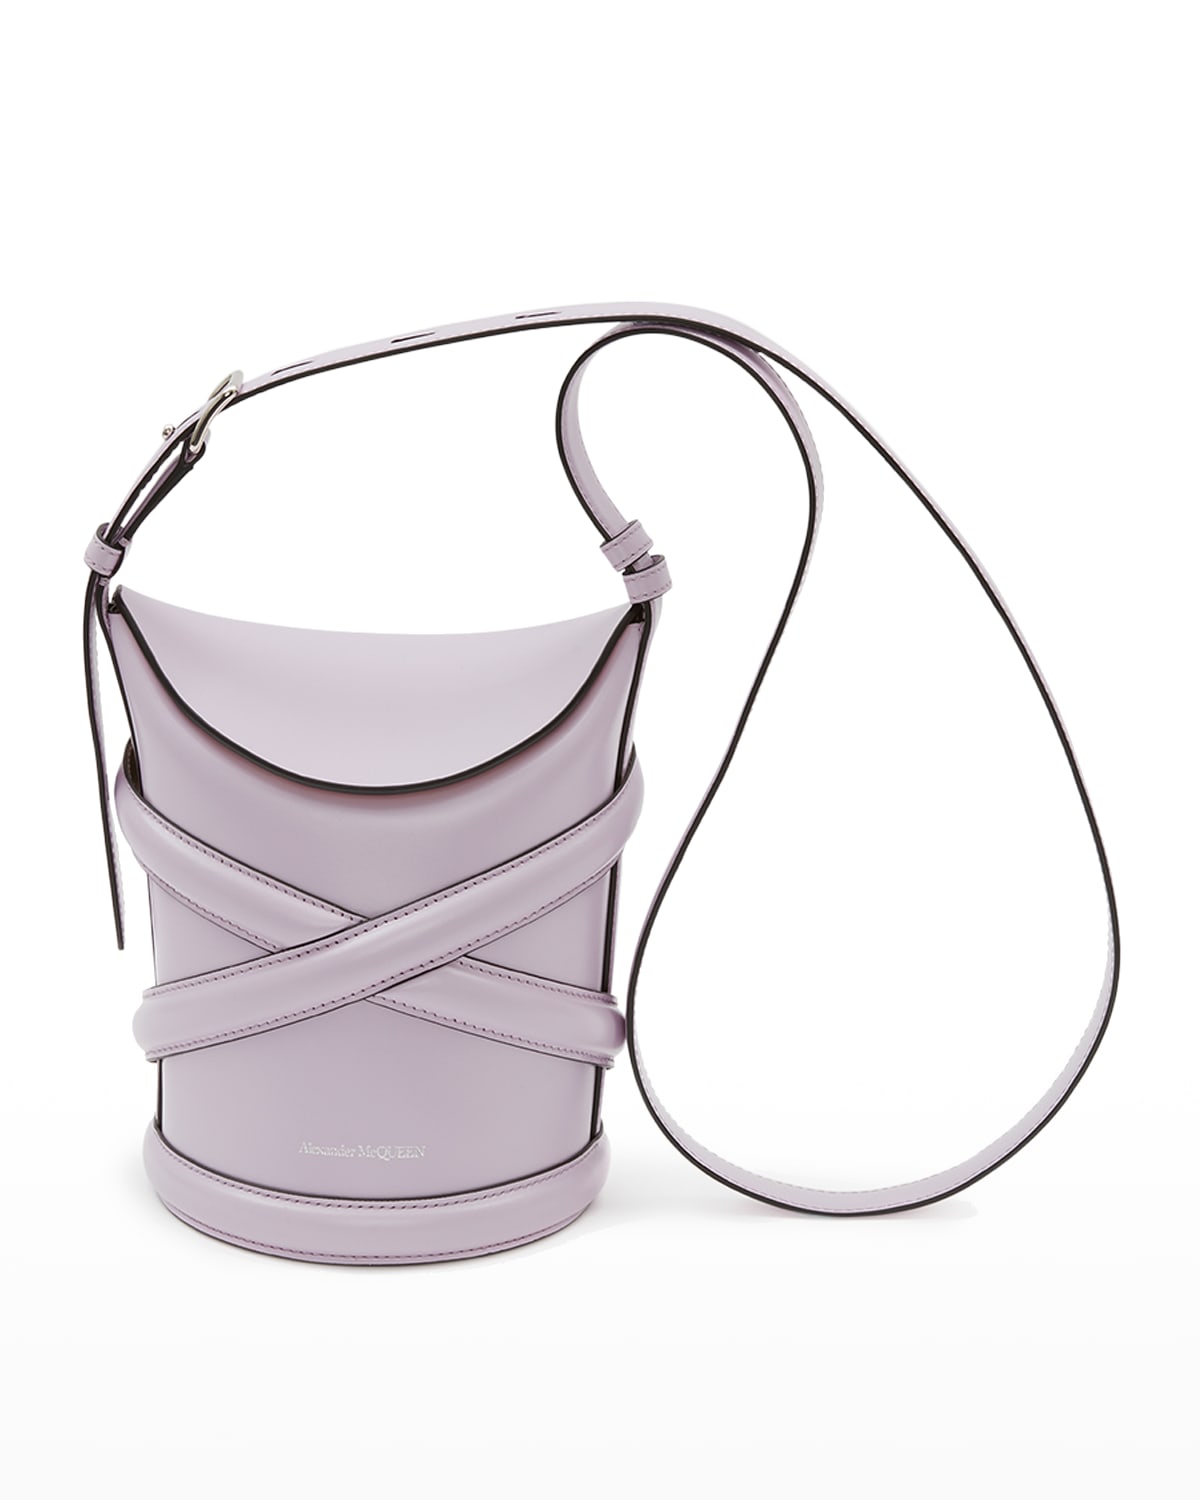 The Curve Small Hobo Bucket Bag